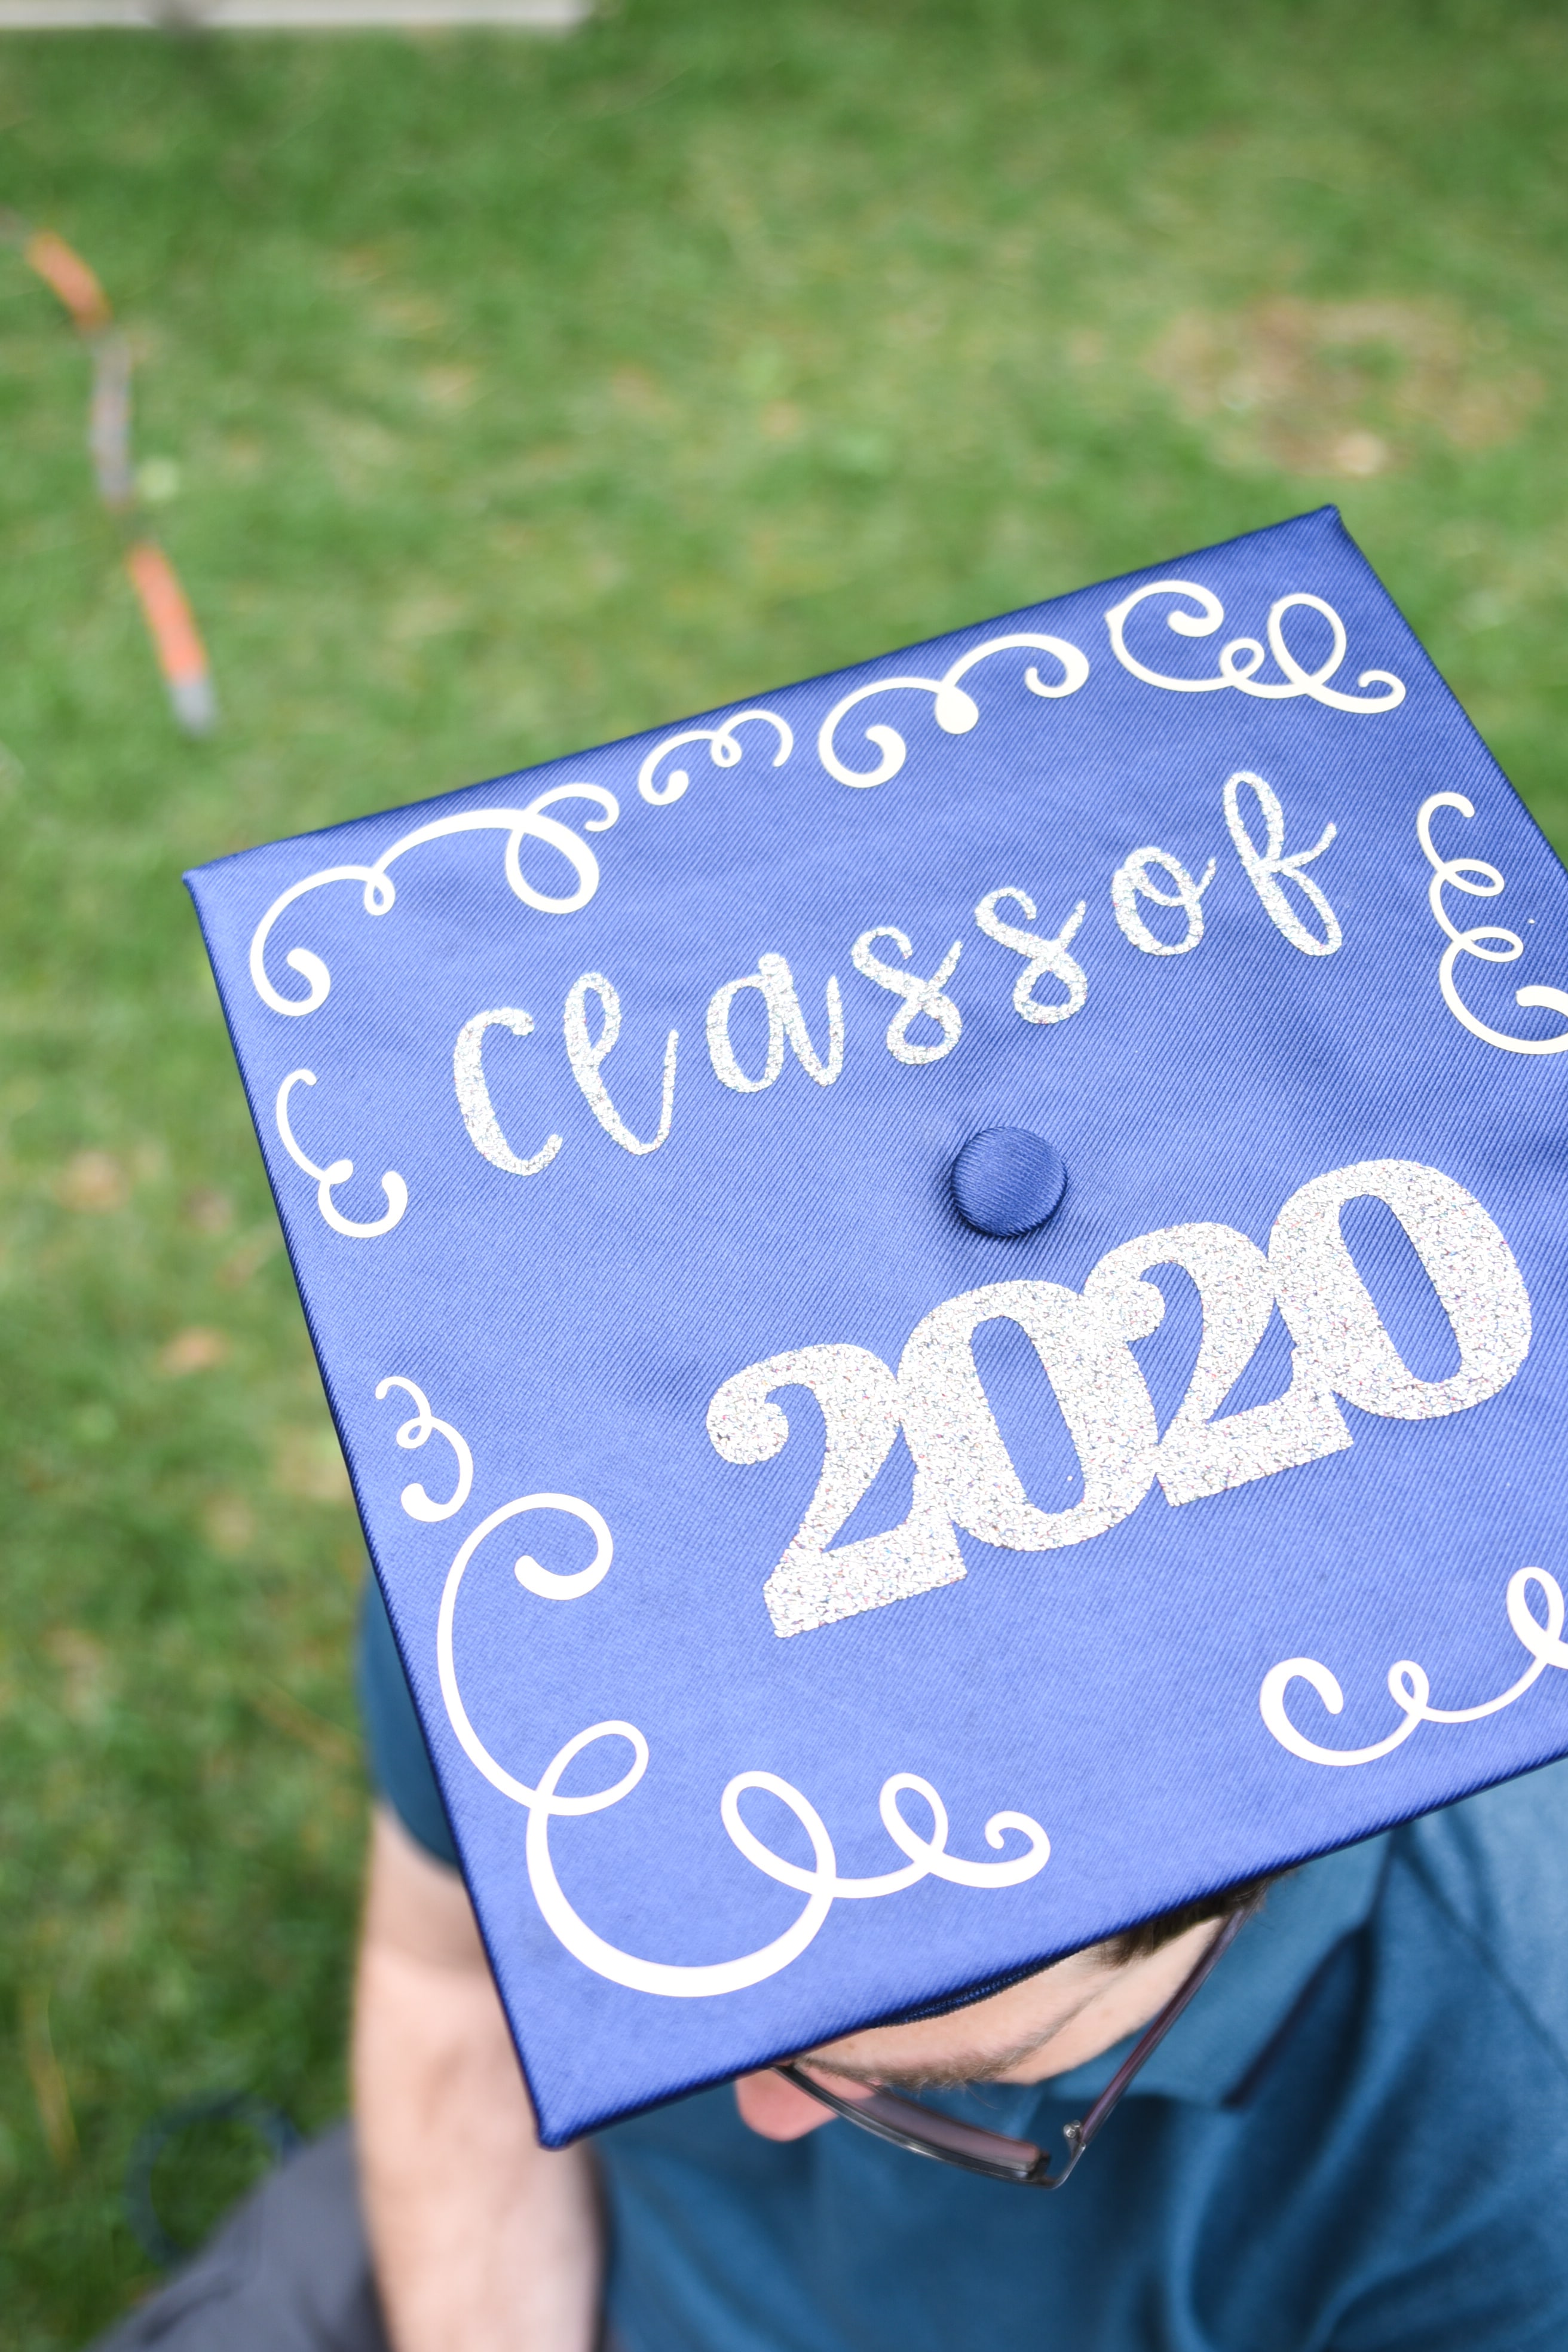 Download How to Decorate a Graduation Cap with Vinyl - Cricut ...